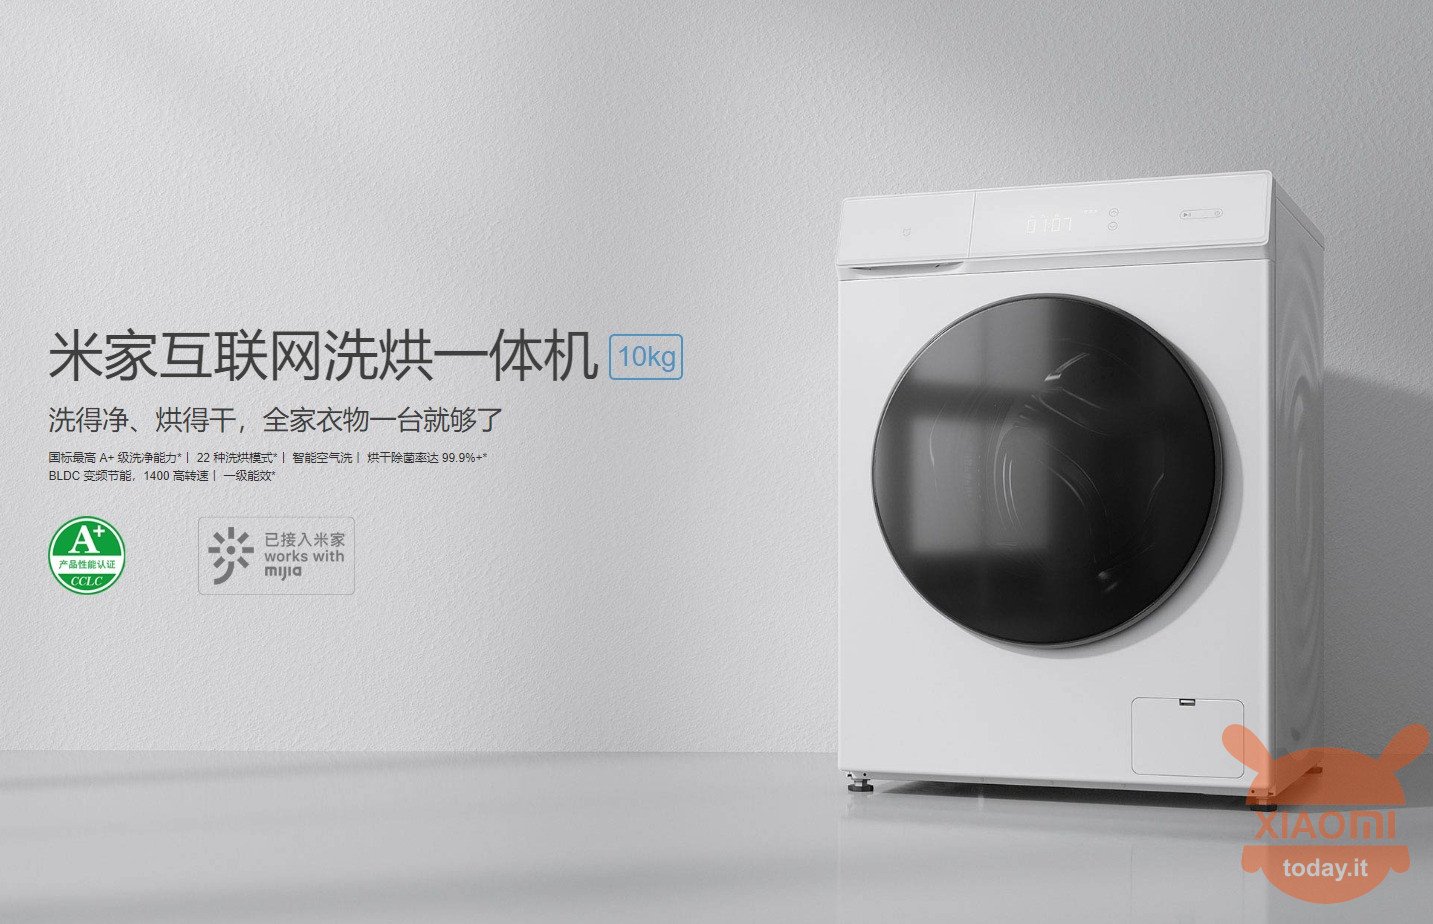 Xiaomi Mijia Direct Drive was- en droogmachine 10kg